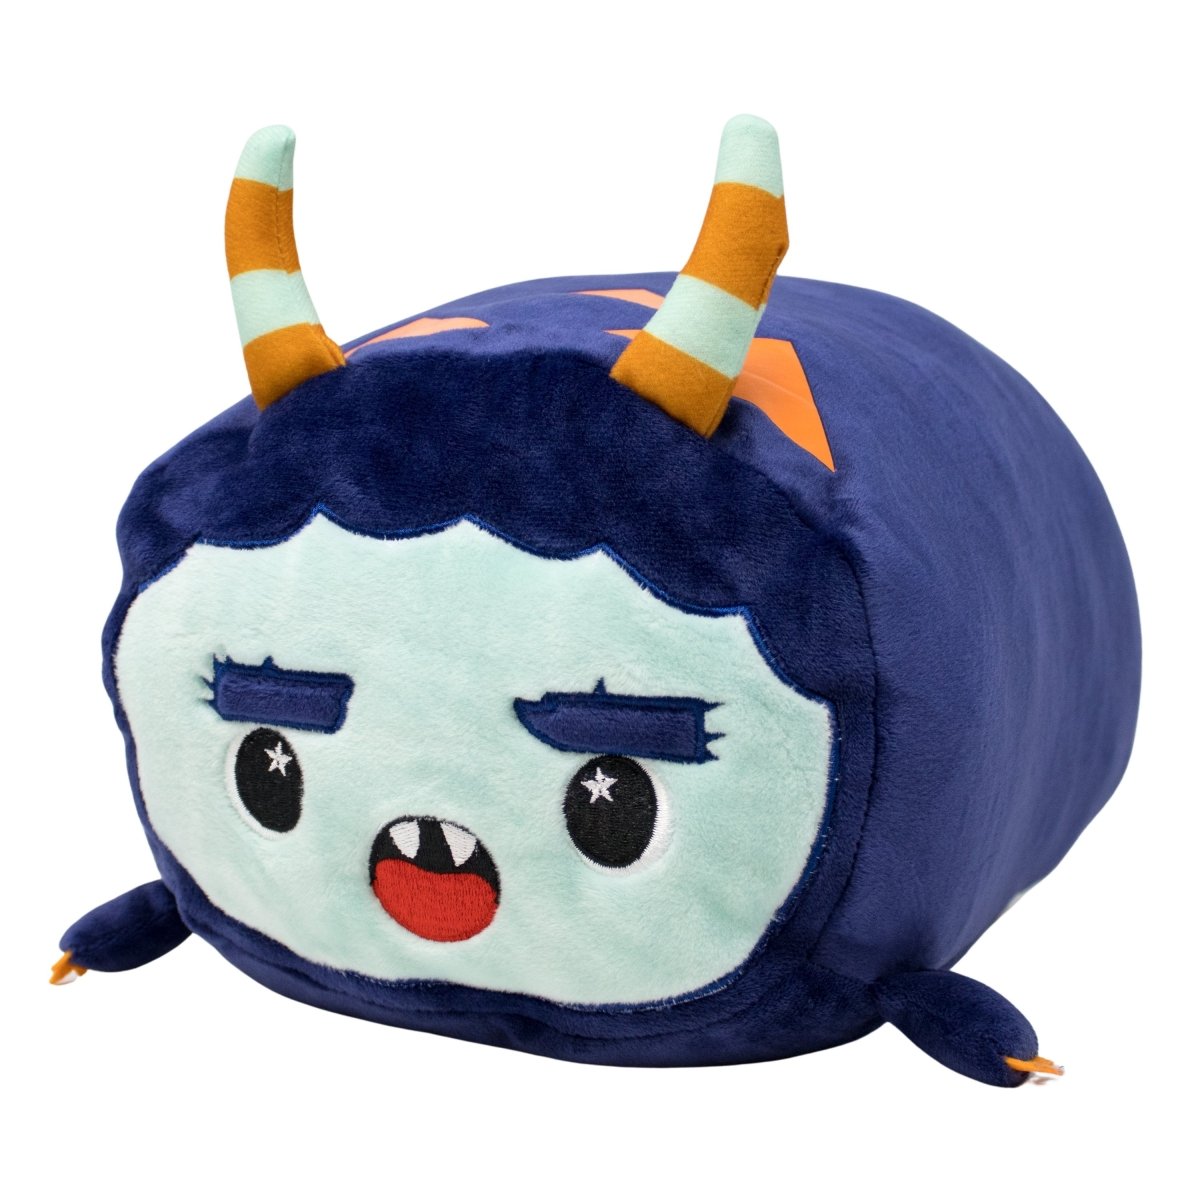 Dark Blue Monster Stuffed Animal with light blue face.